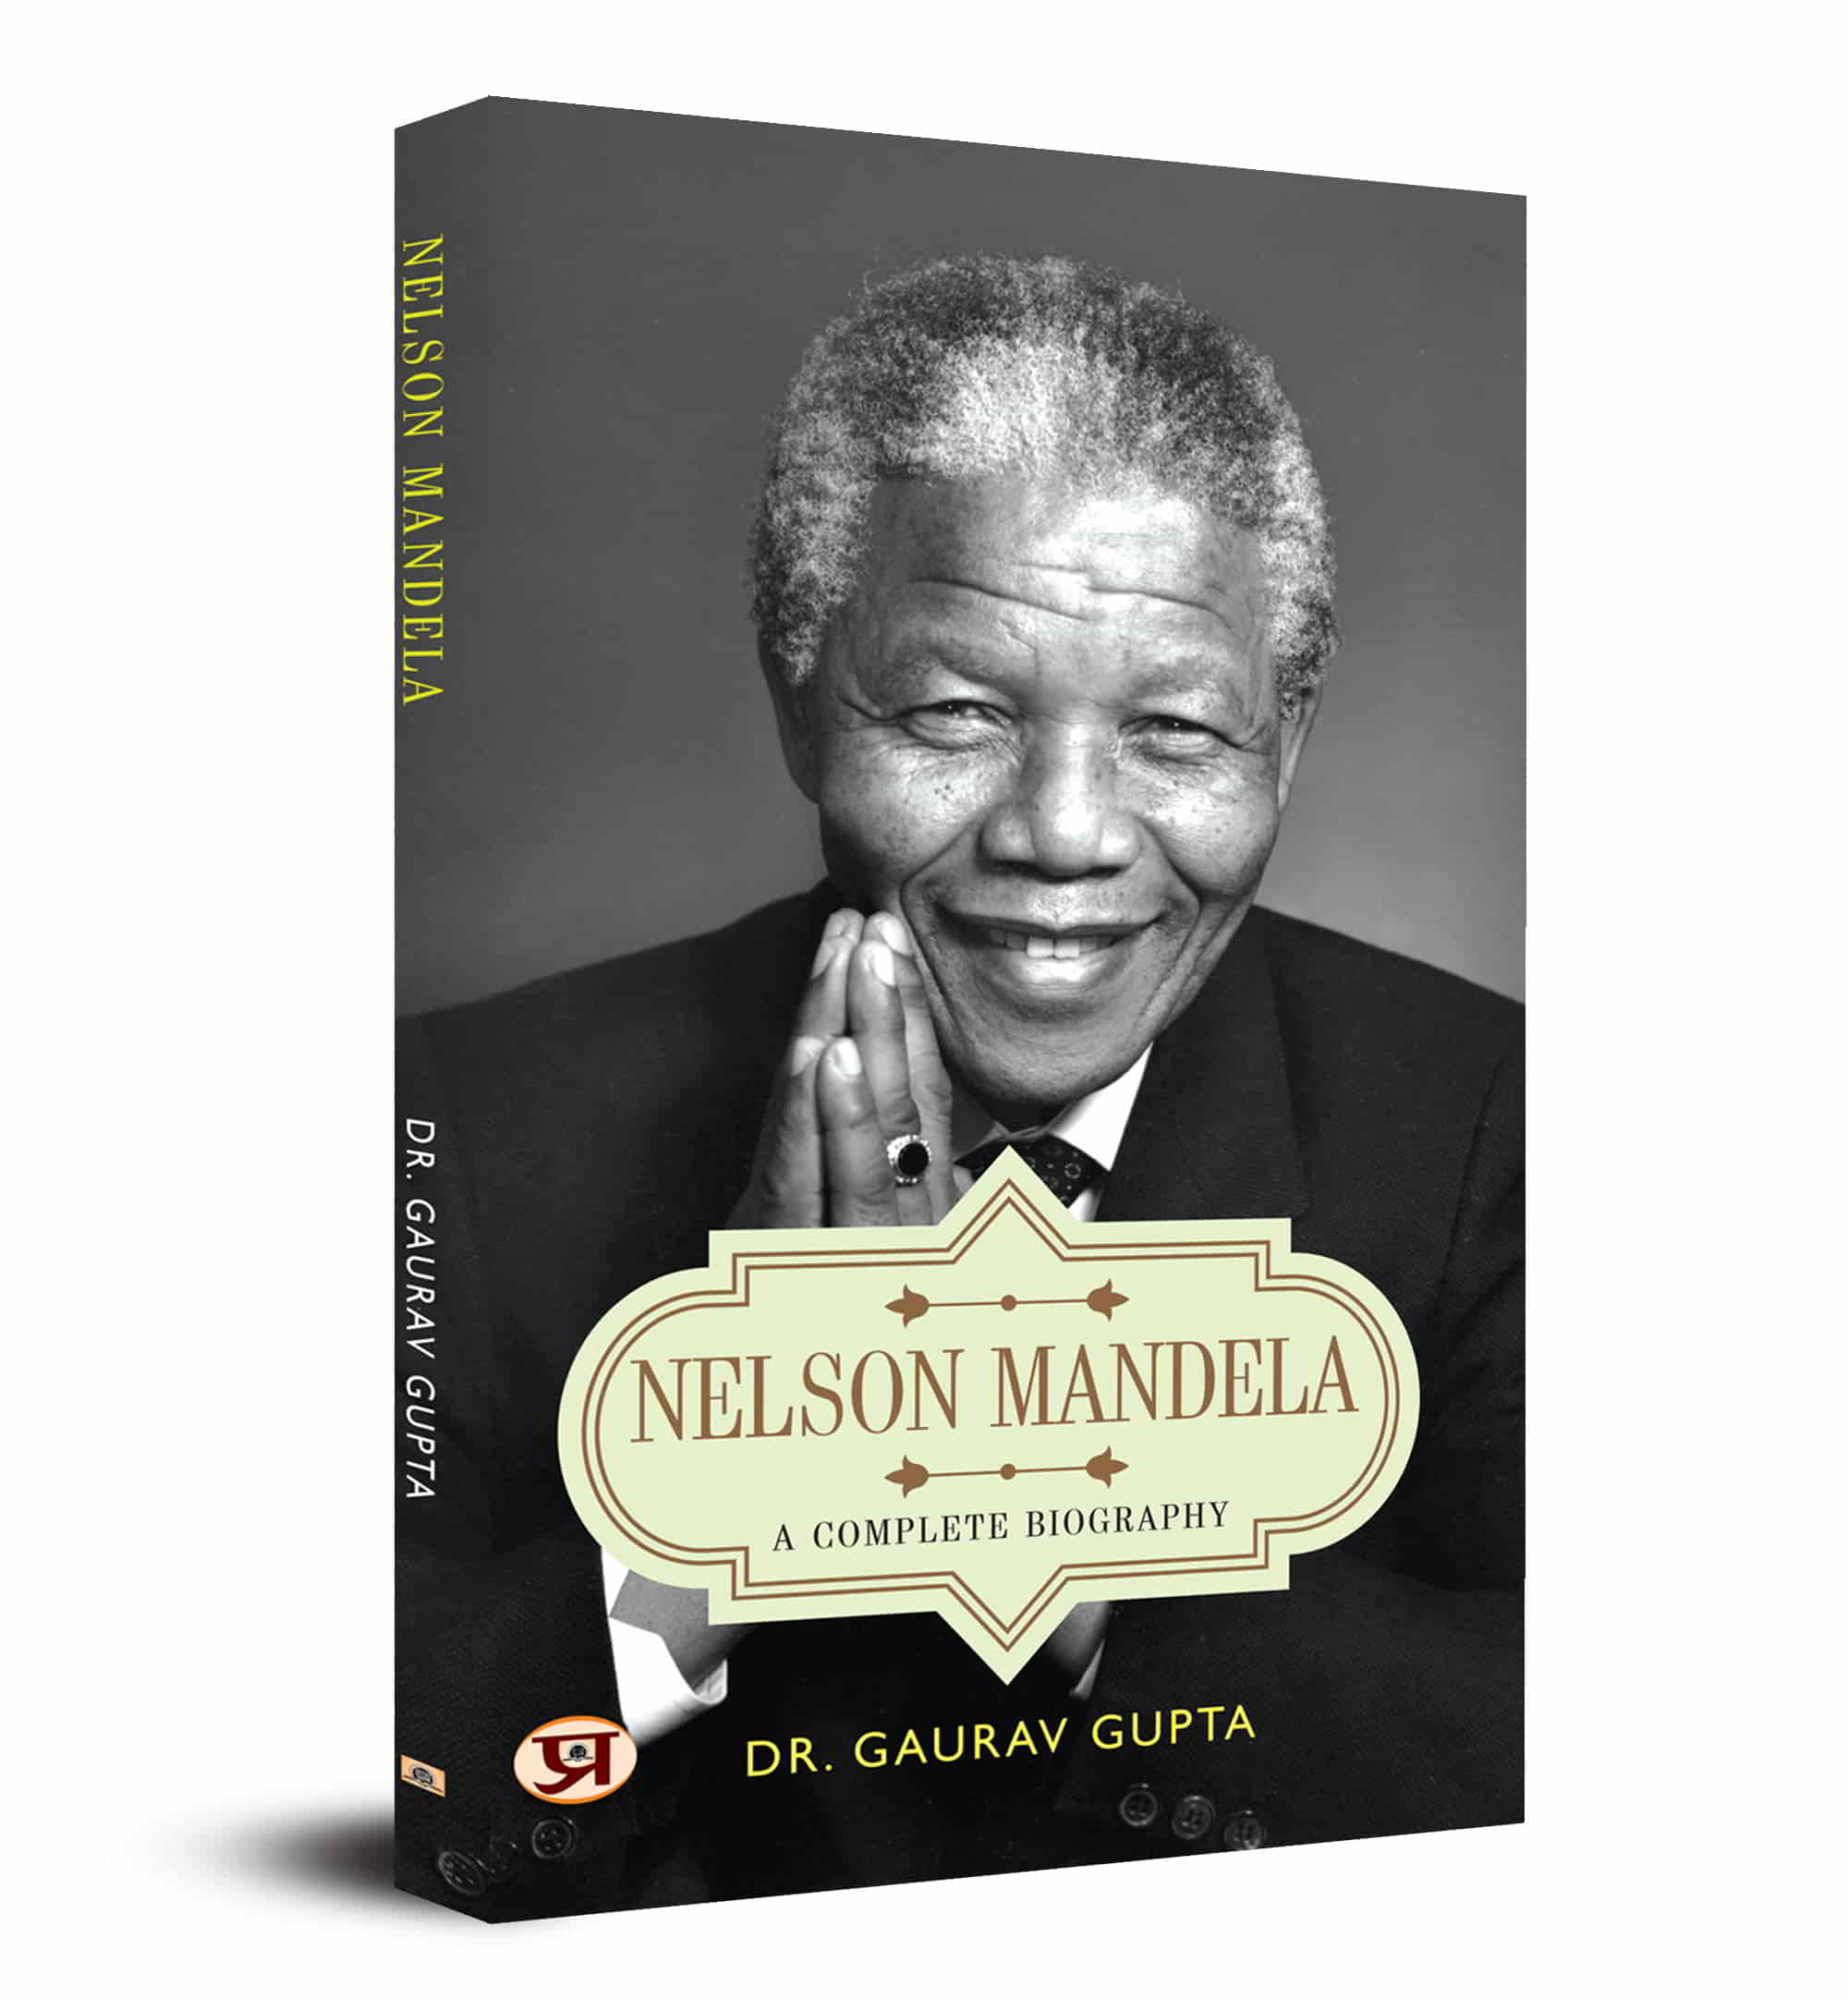 Nelson Mandela: A Complete Biography